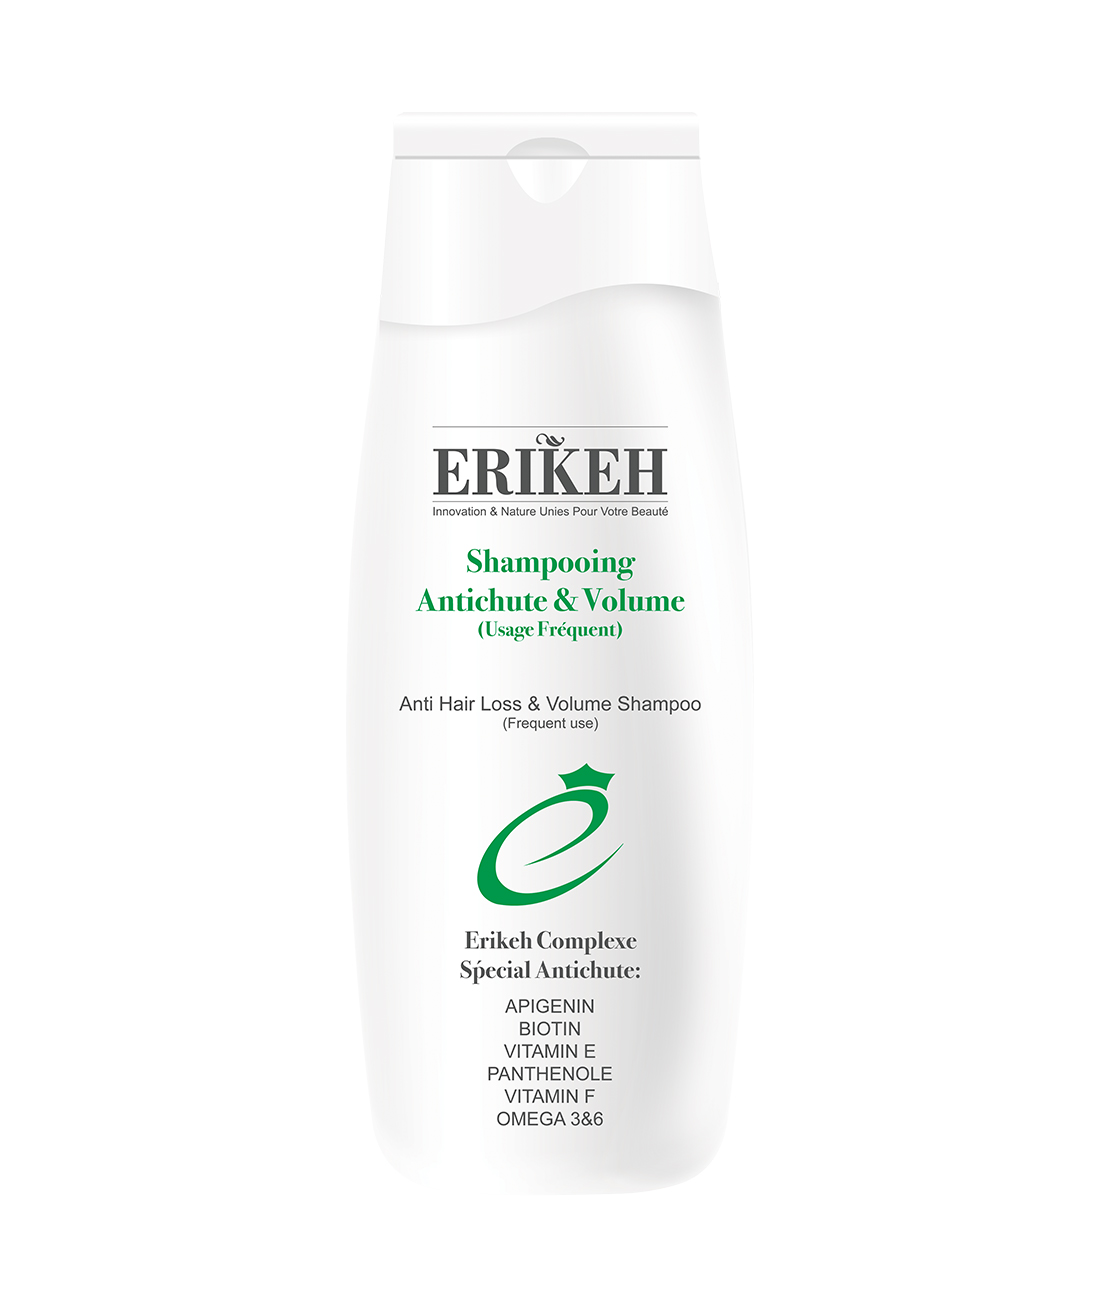 Erikeh Paris - Anti Hair Loss & Volume Shampoo